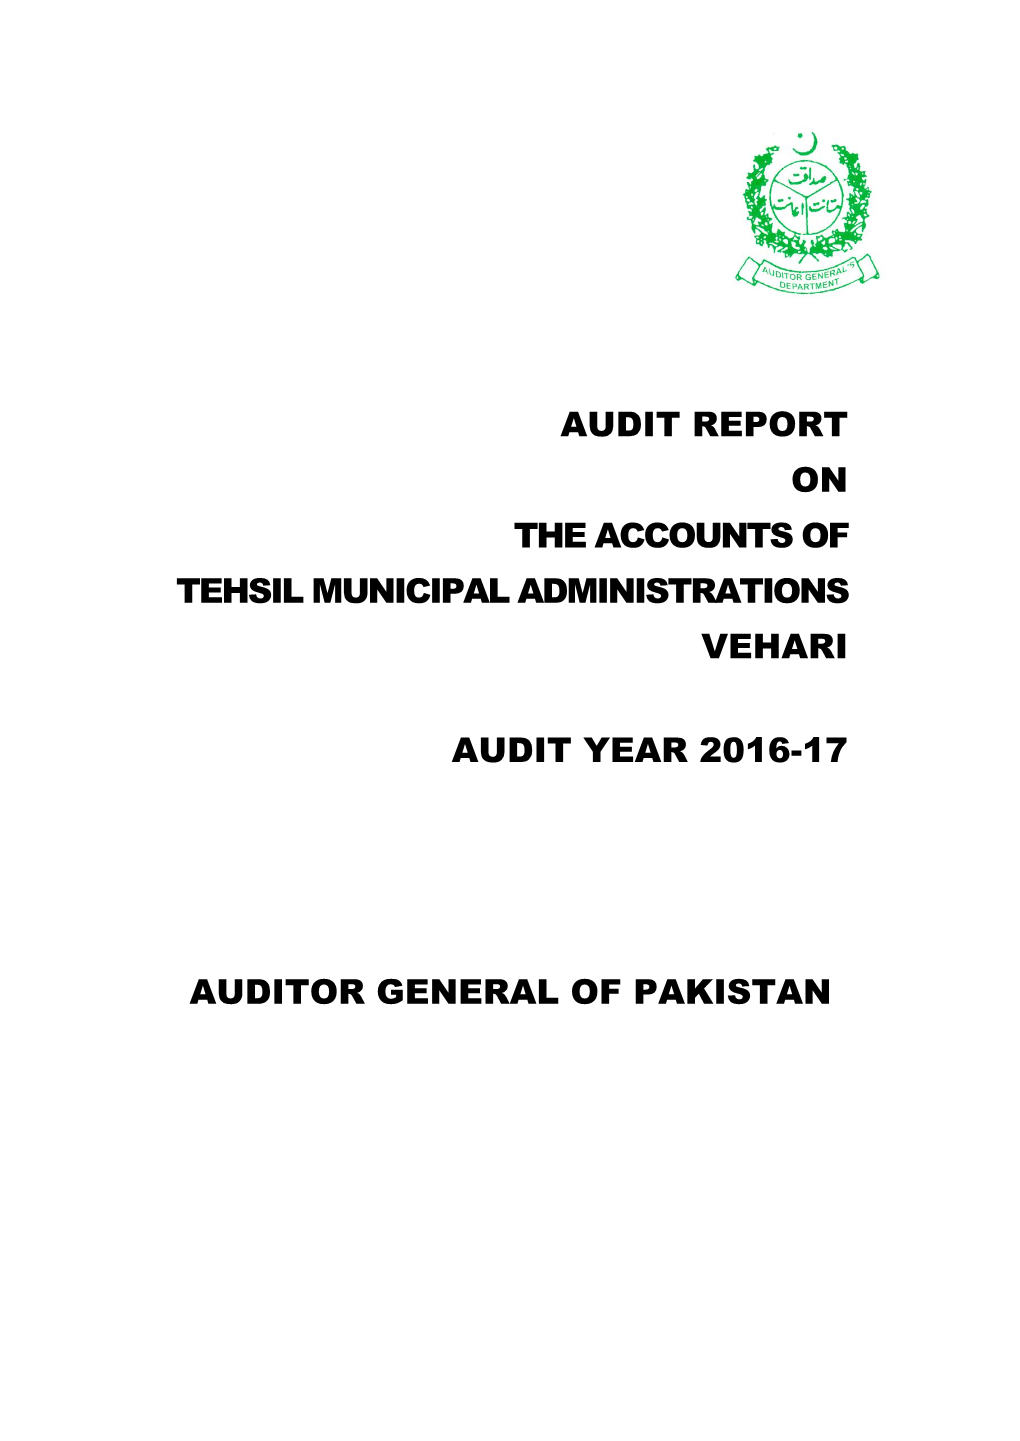 Audit Report on the Accounts of Tehsil Municipal Administrations Vehari